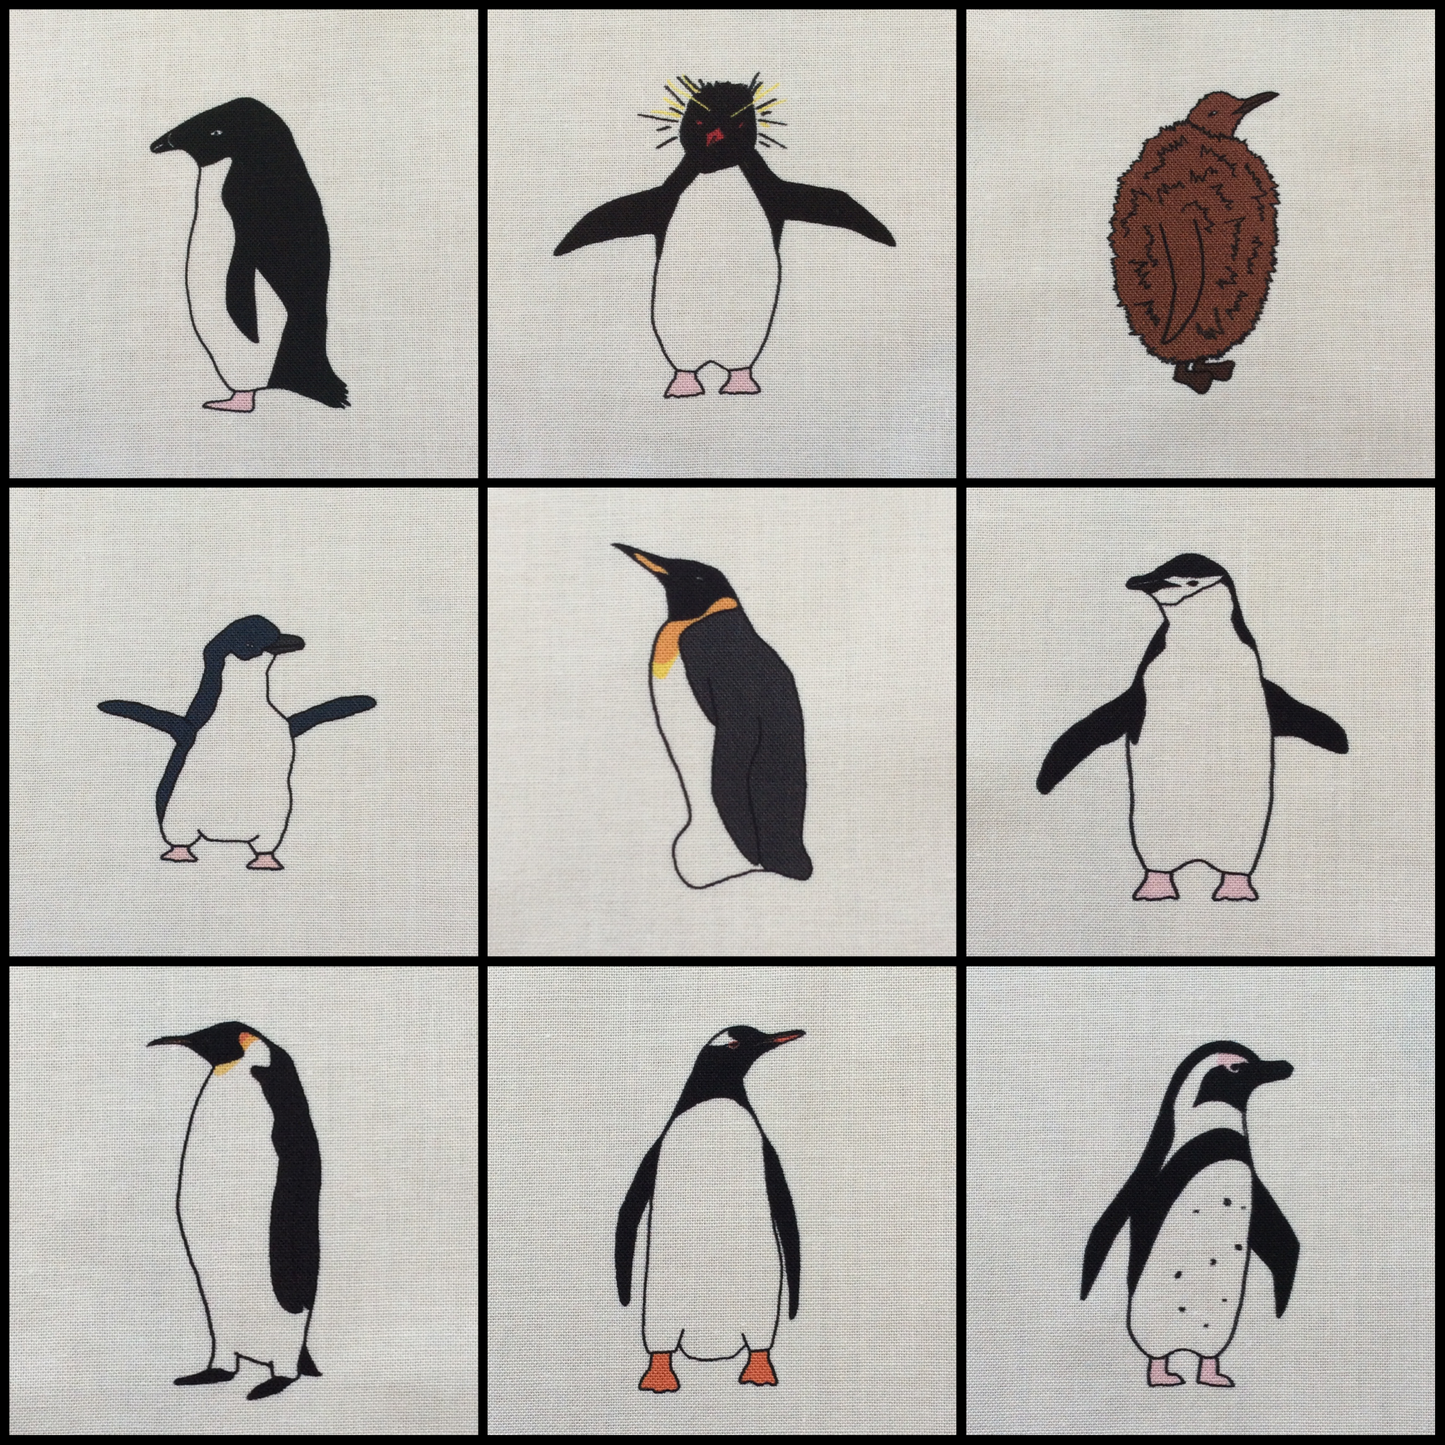 Penguin fabric strip, 9 images